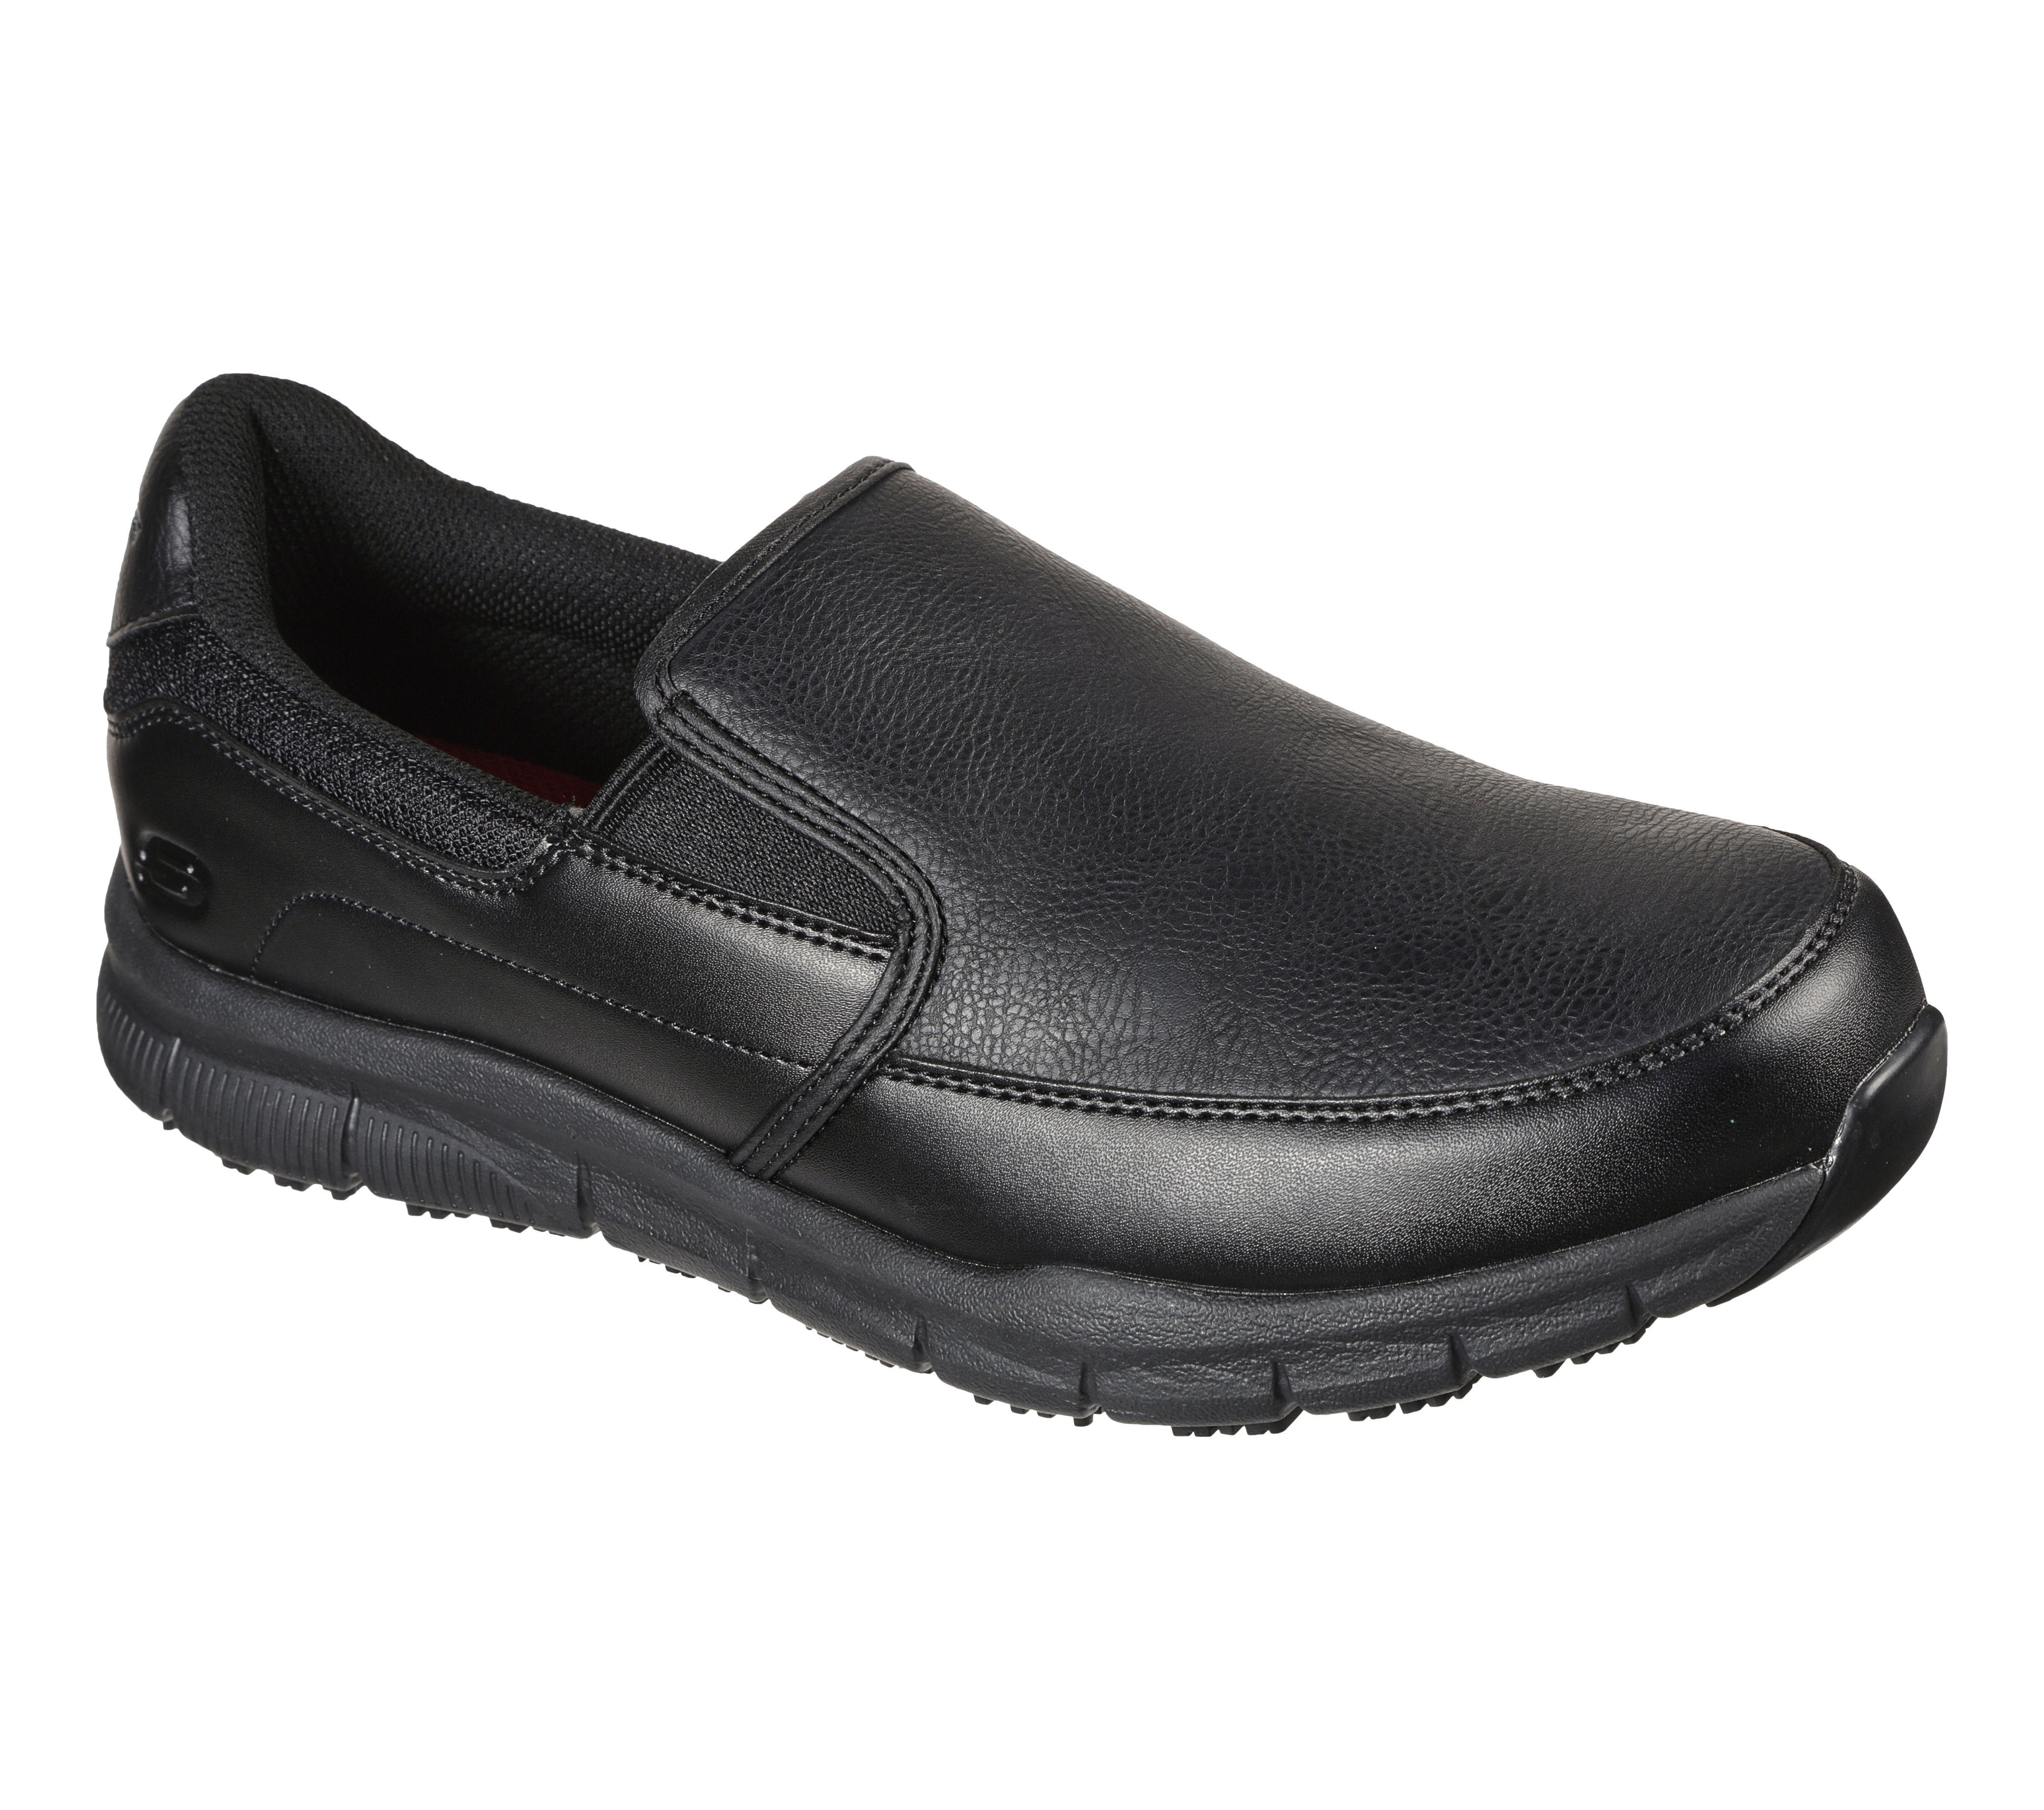 Skechers Men's Work Relaxed Fit Nampa Groton Slip Resistant Shoe, Black, Size: 10 M